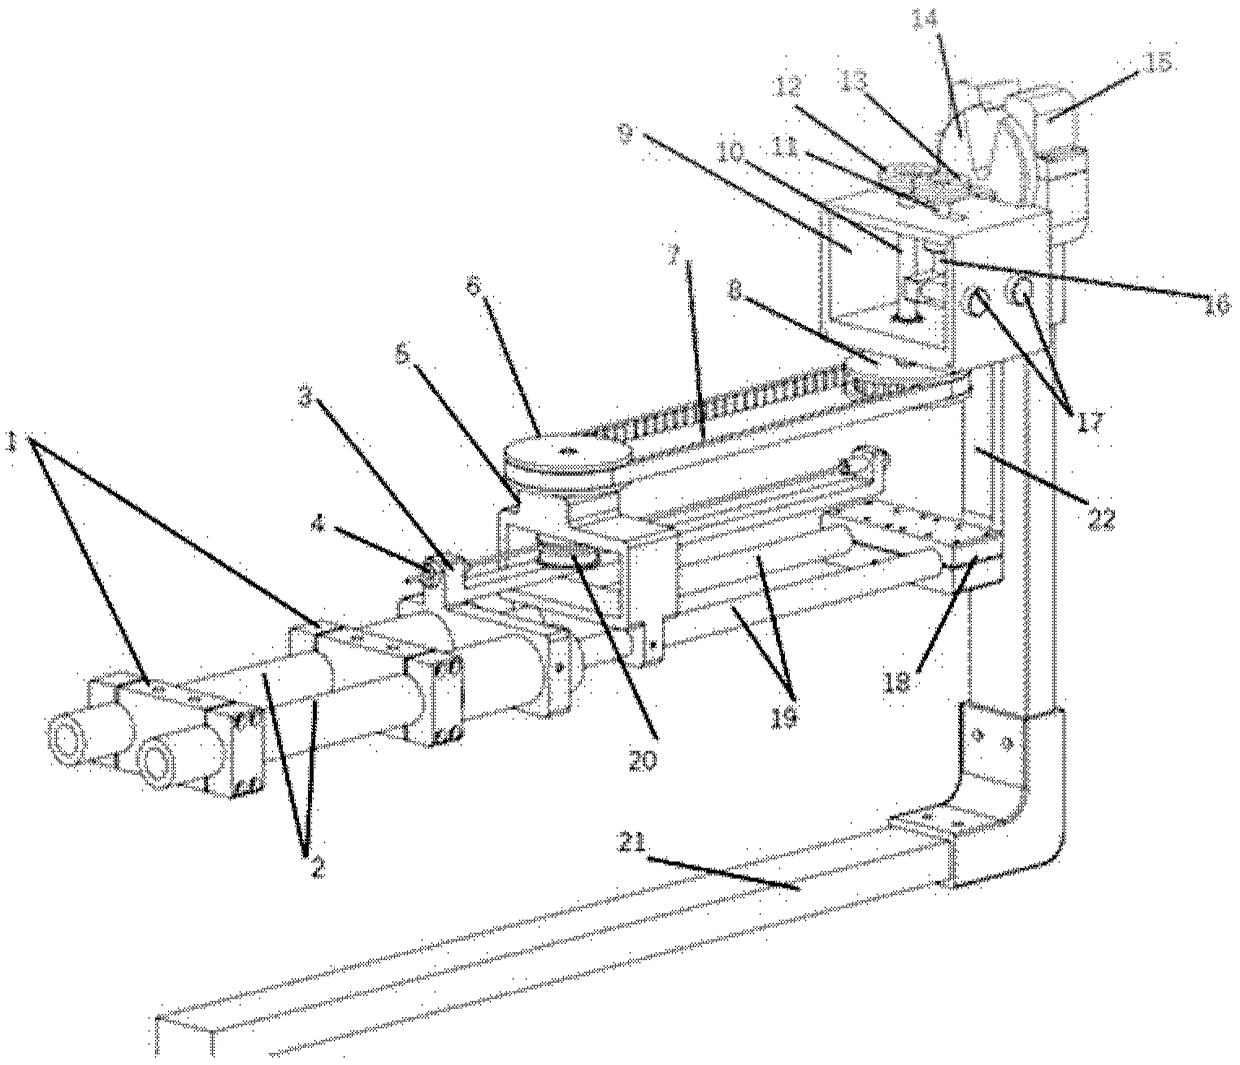 Robot operated flexible ureteroscope anti-bending mechanism